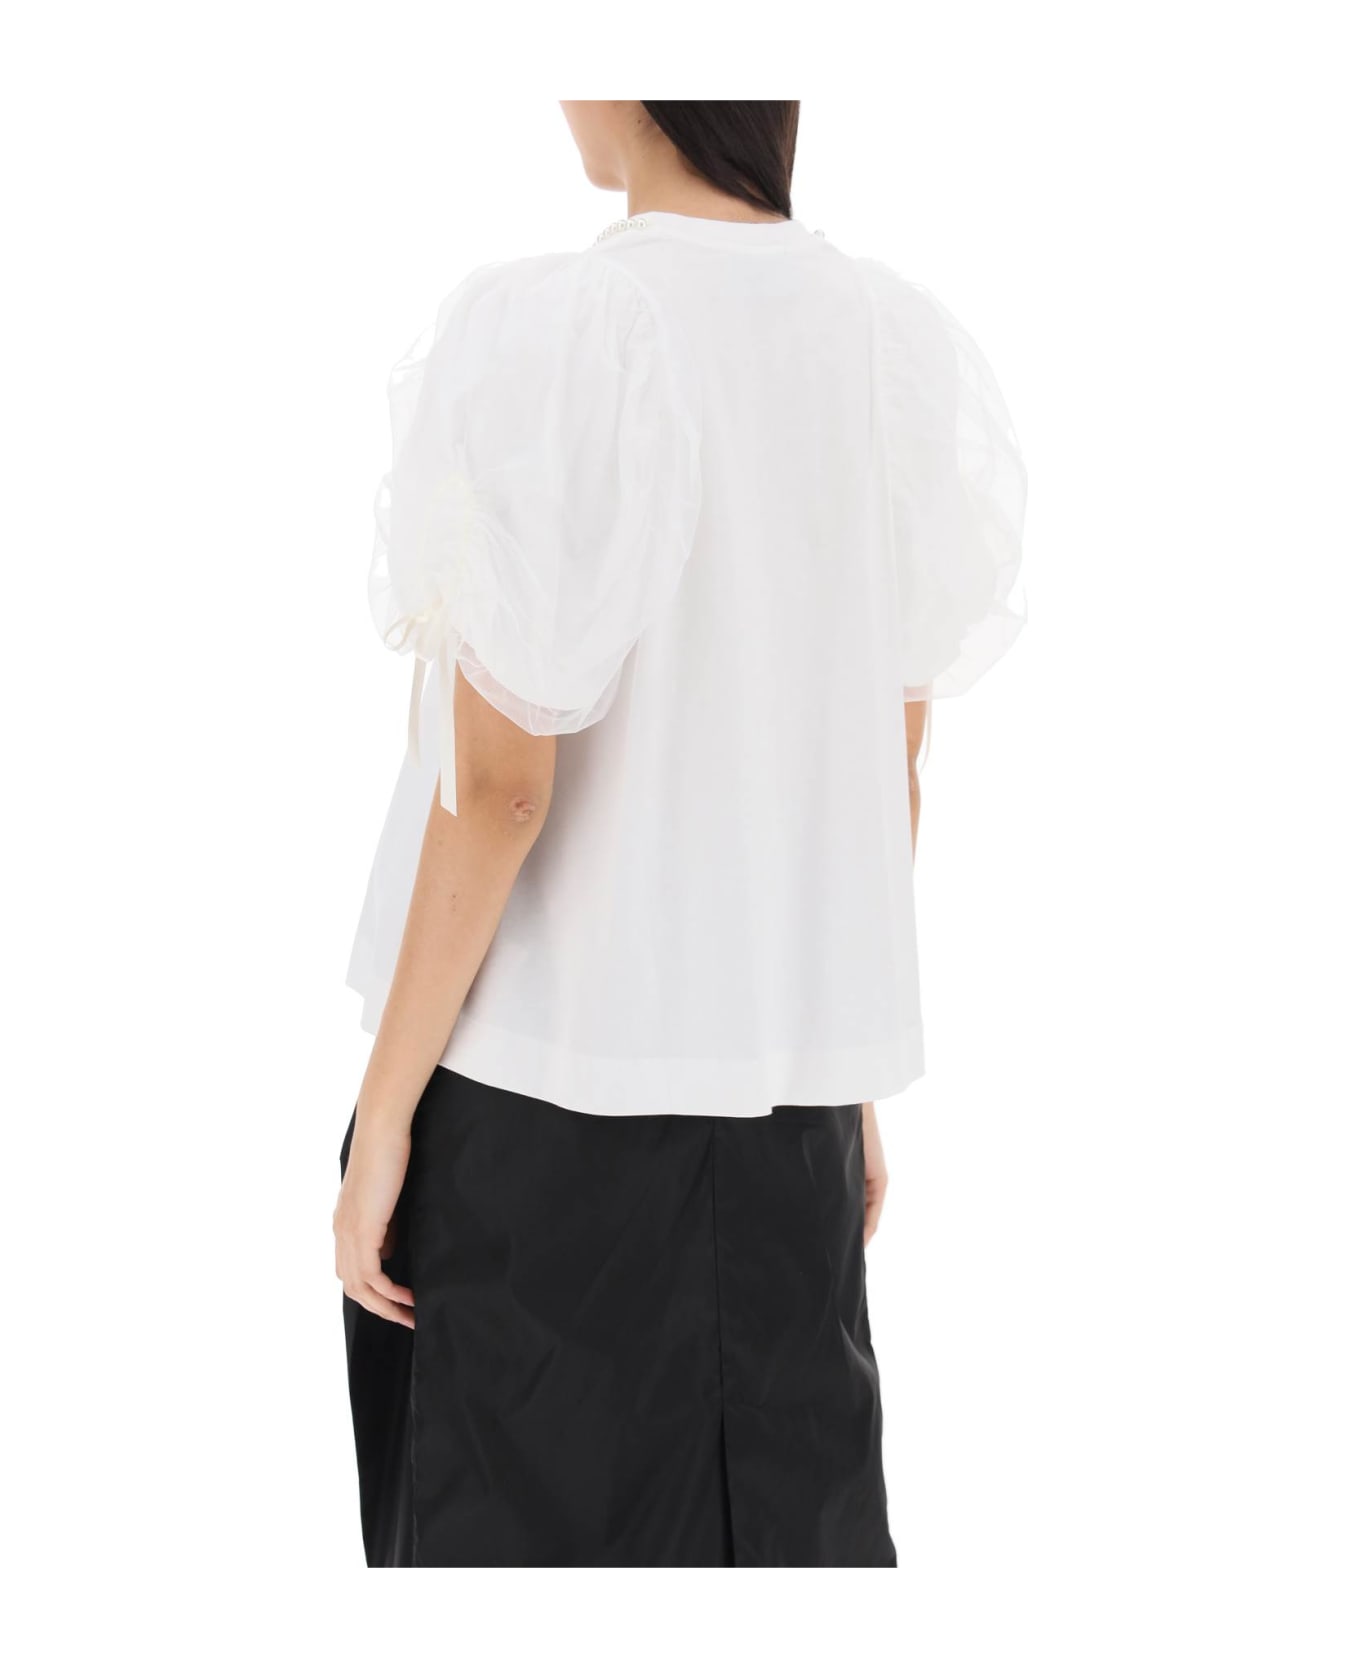 Simone Rocha Puff Sleeves T-shirt - WHITE PEARL (White)